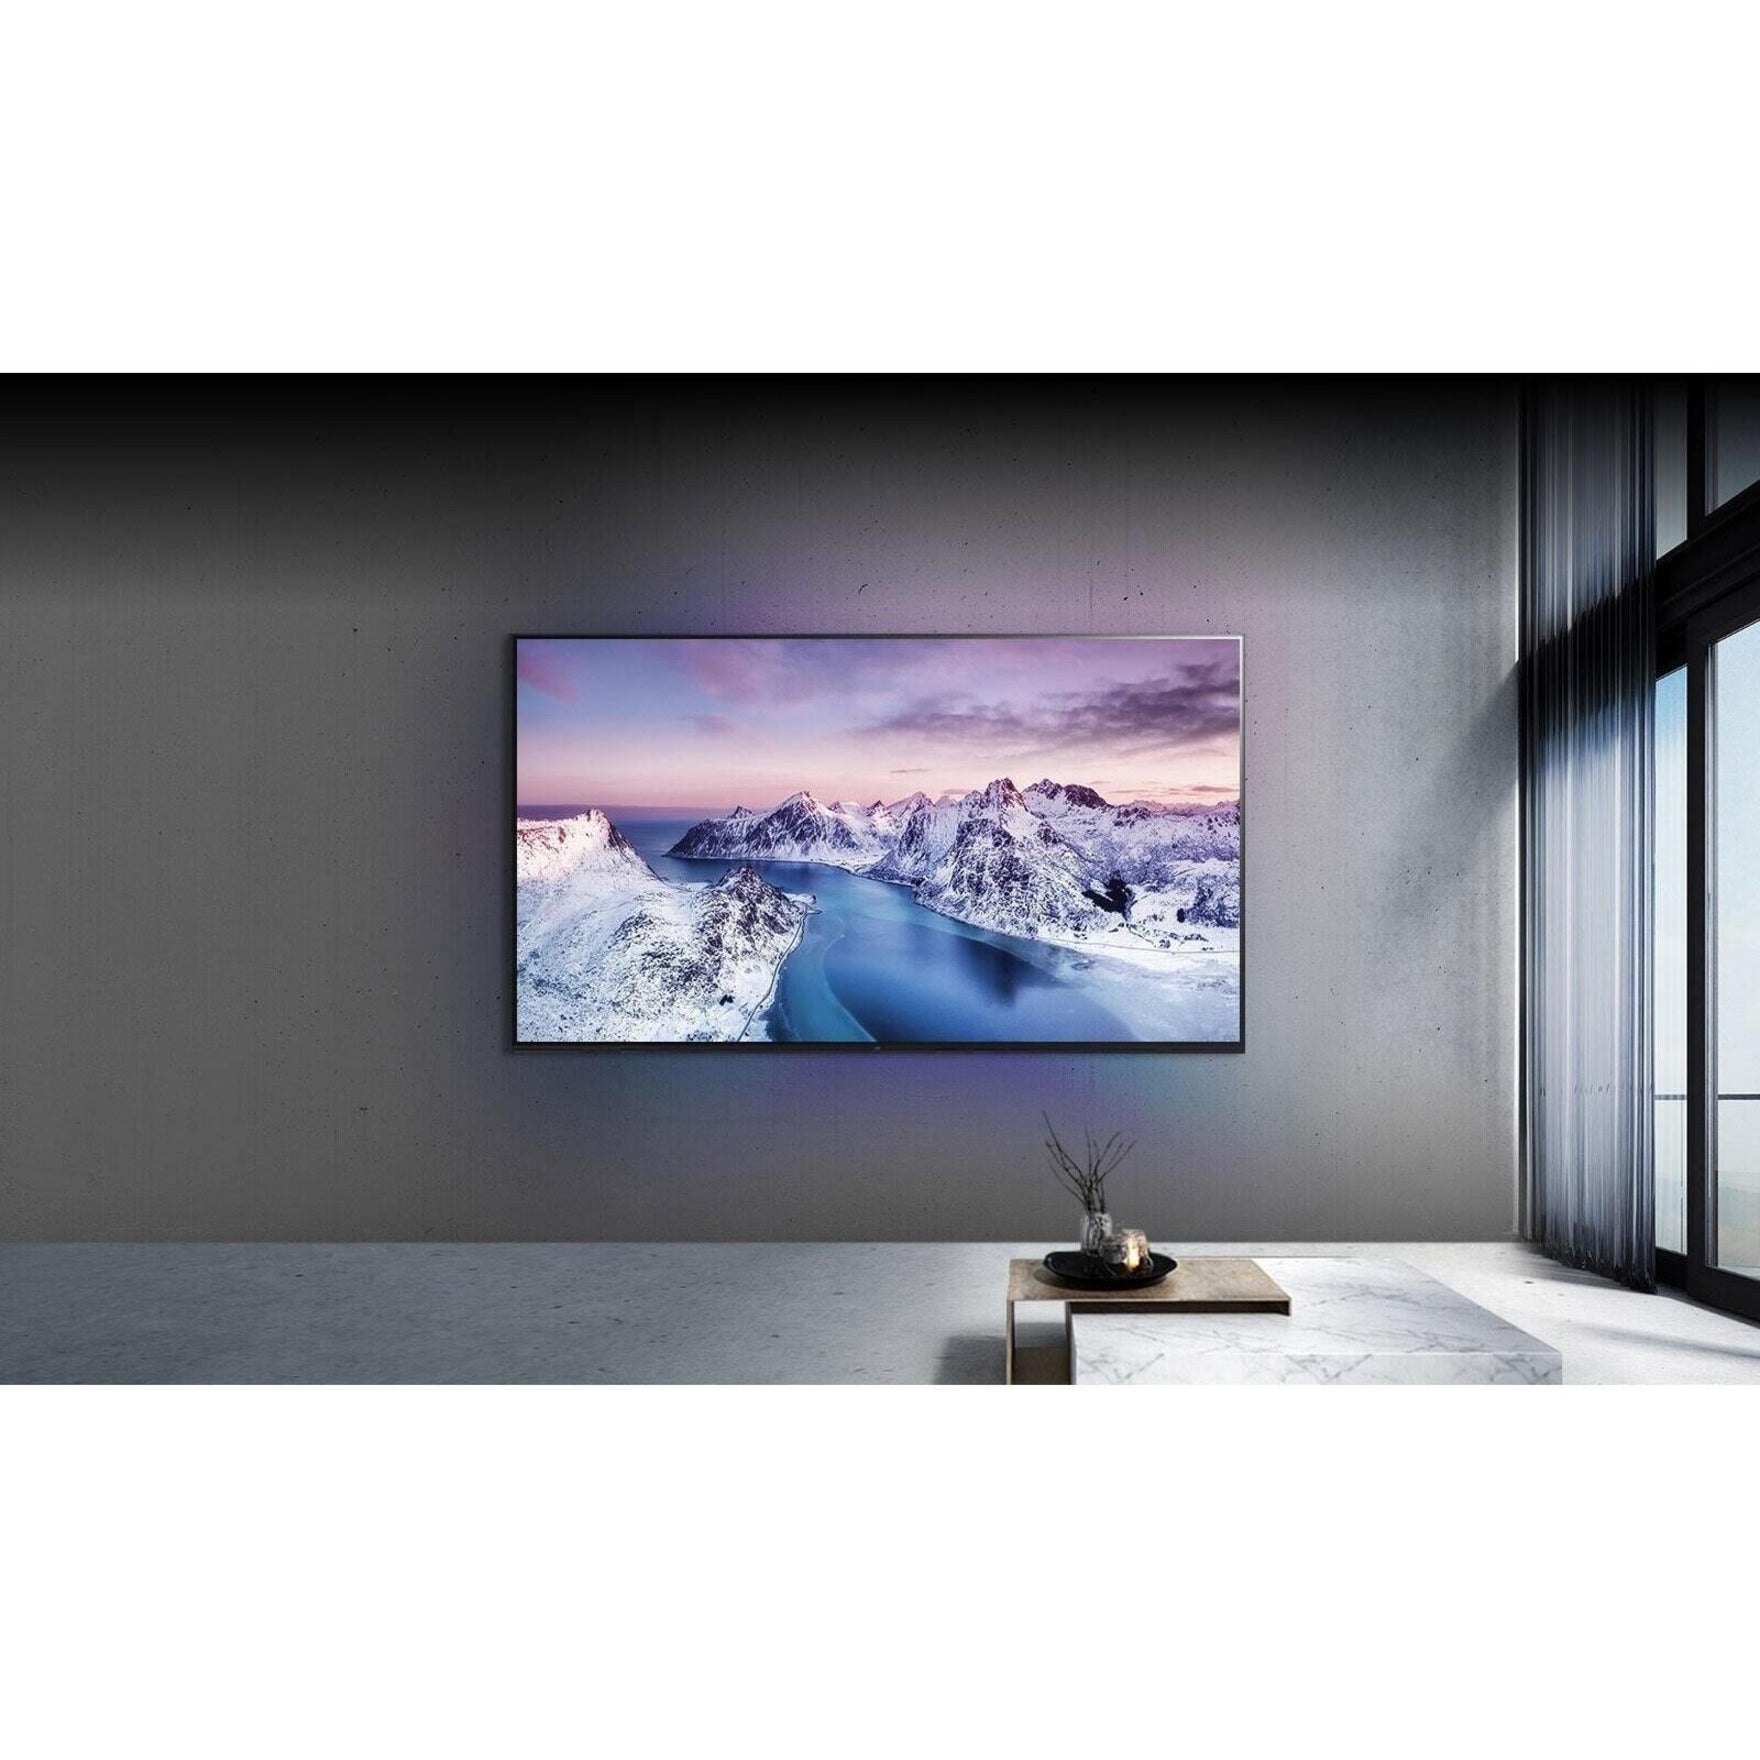 LG 55UQ9000PUD Smart LED-LCD TV 55" 4K UHDTV - Gray, Dark Silver